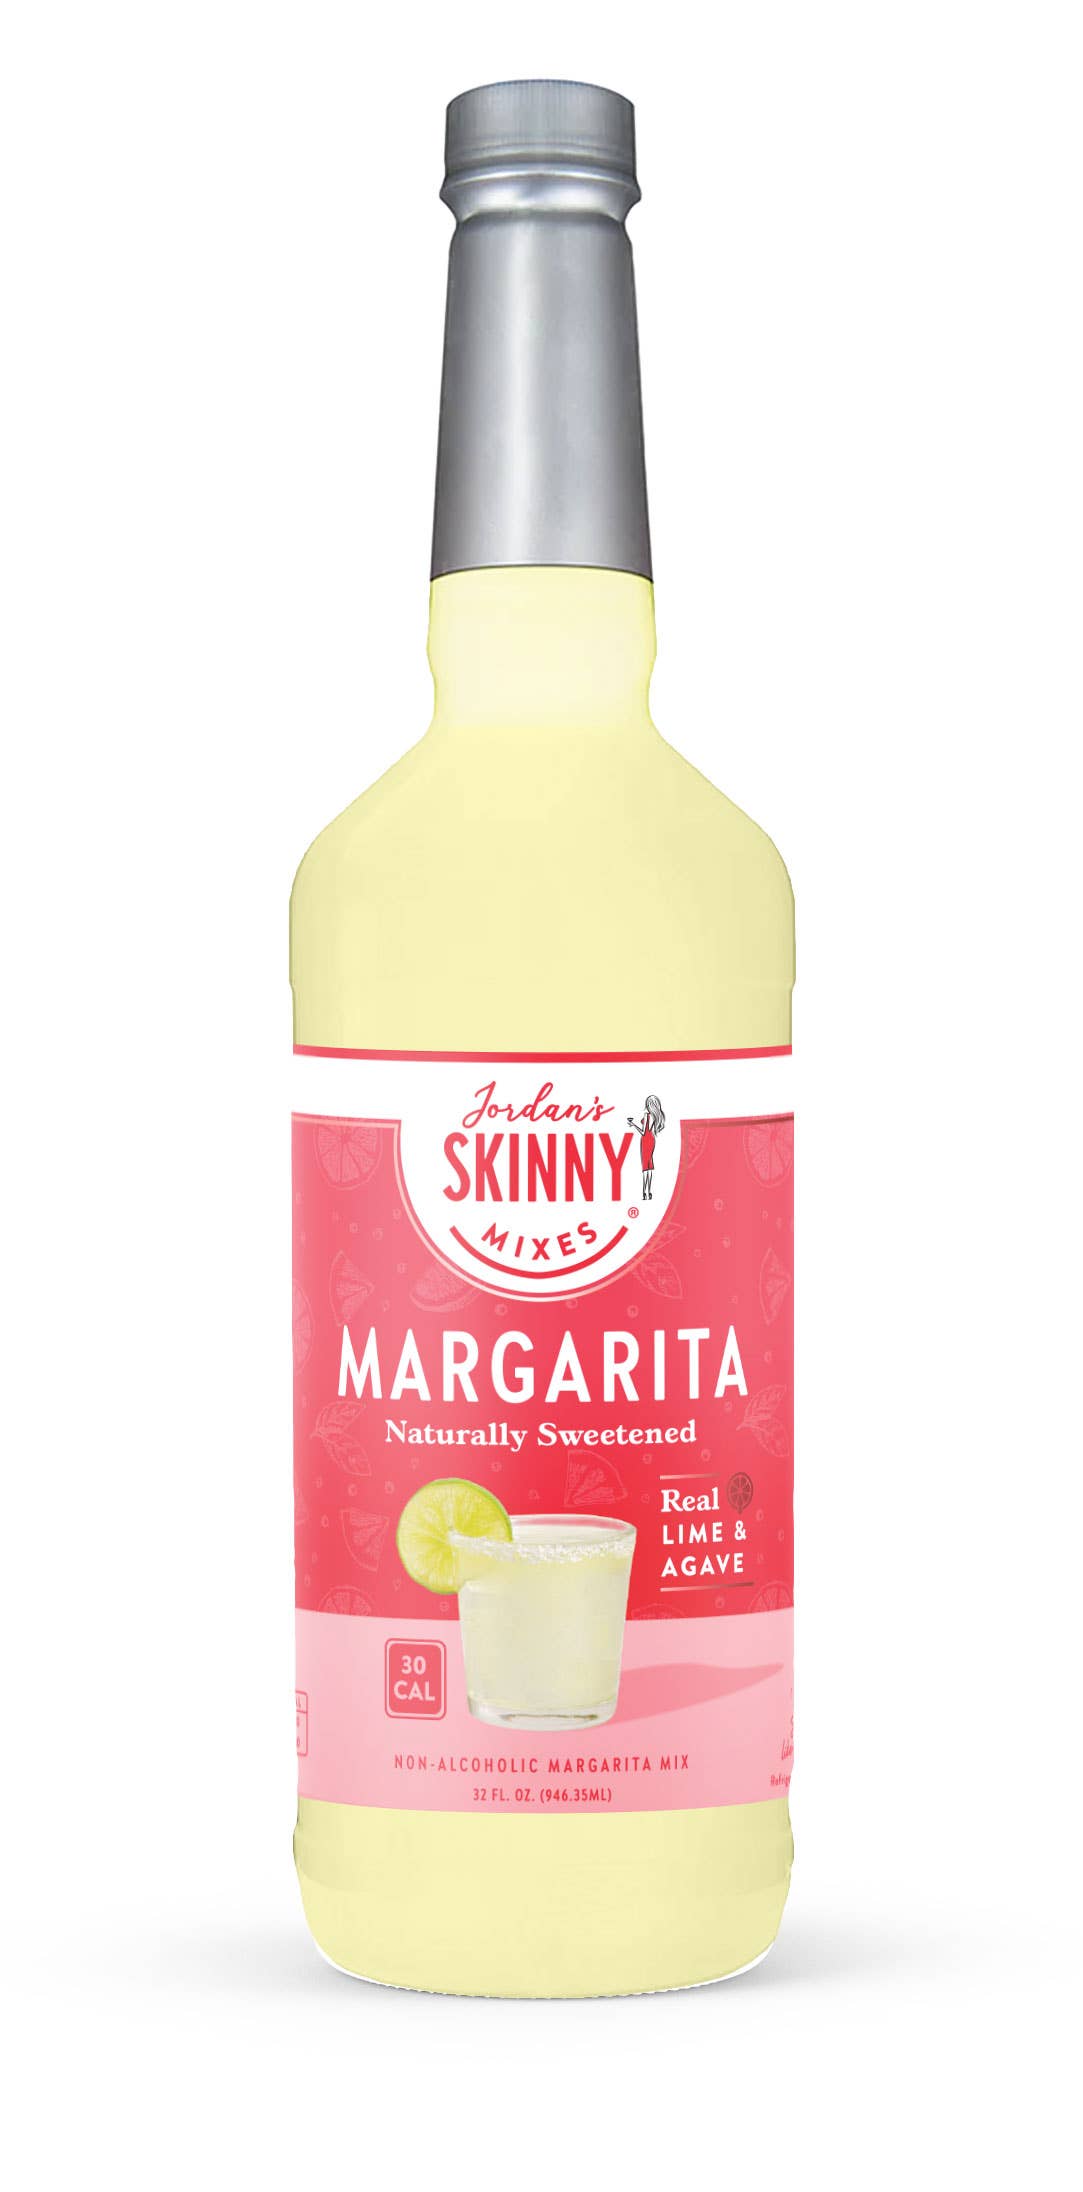 Skinny Mixes Original Margarita Mixer